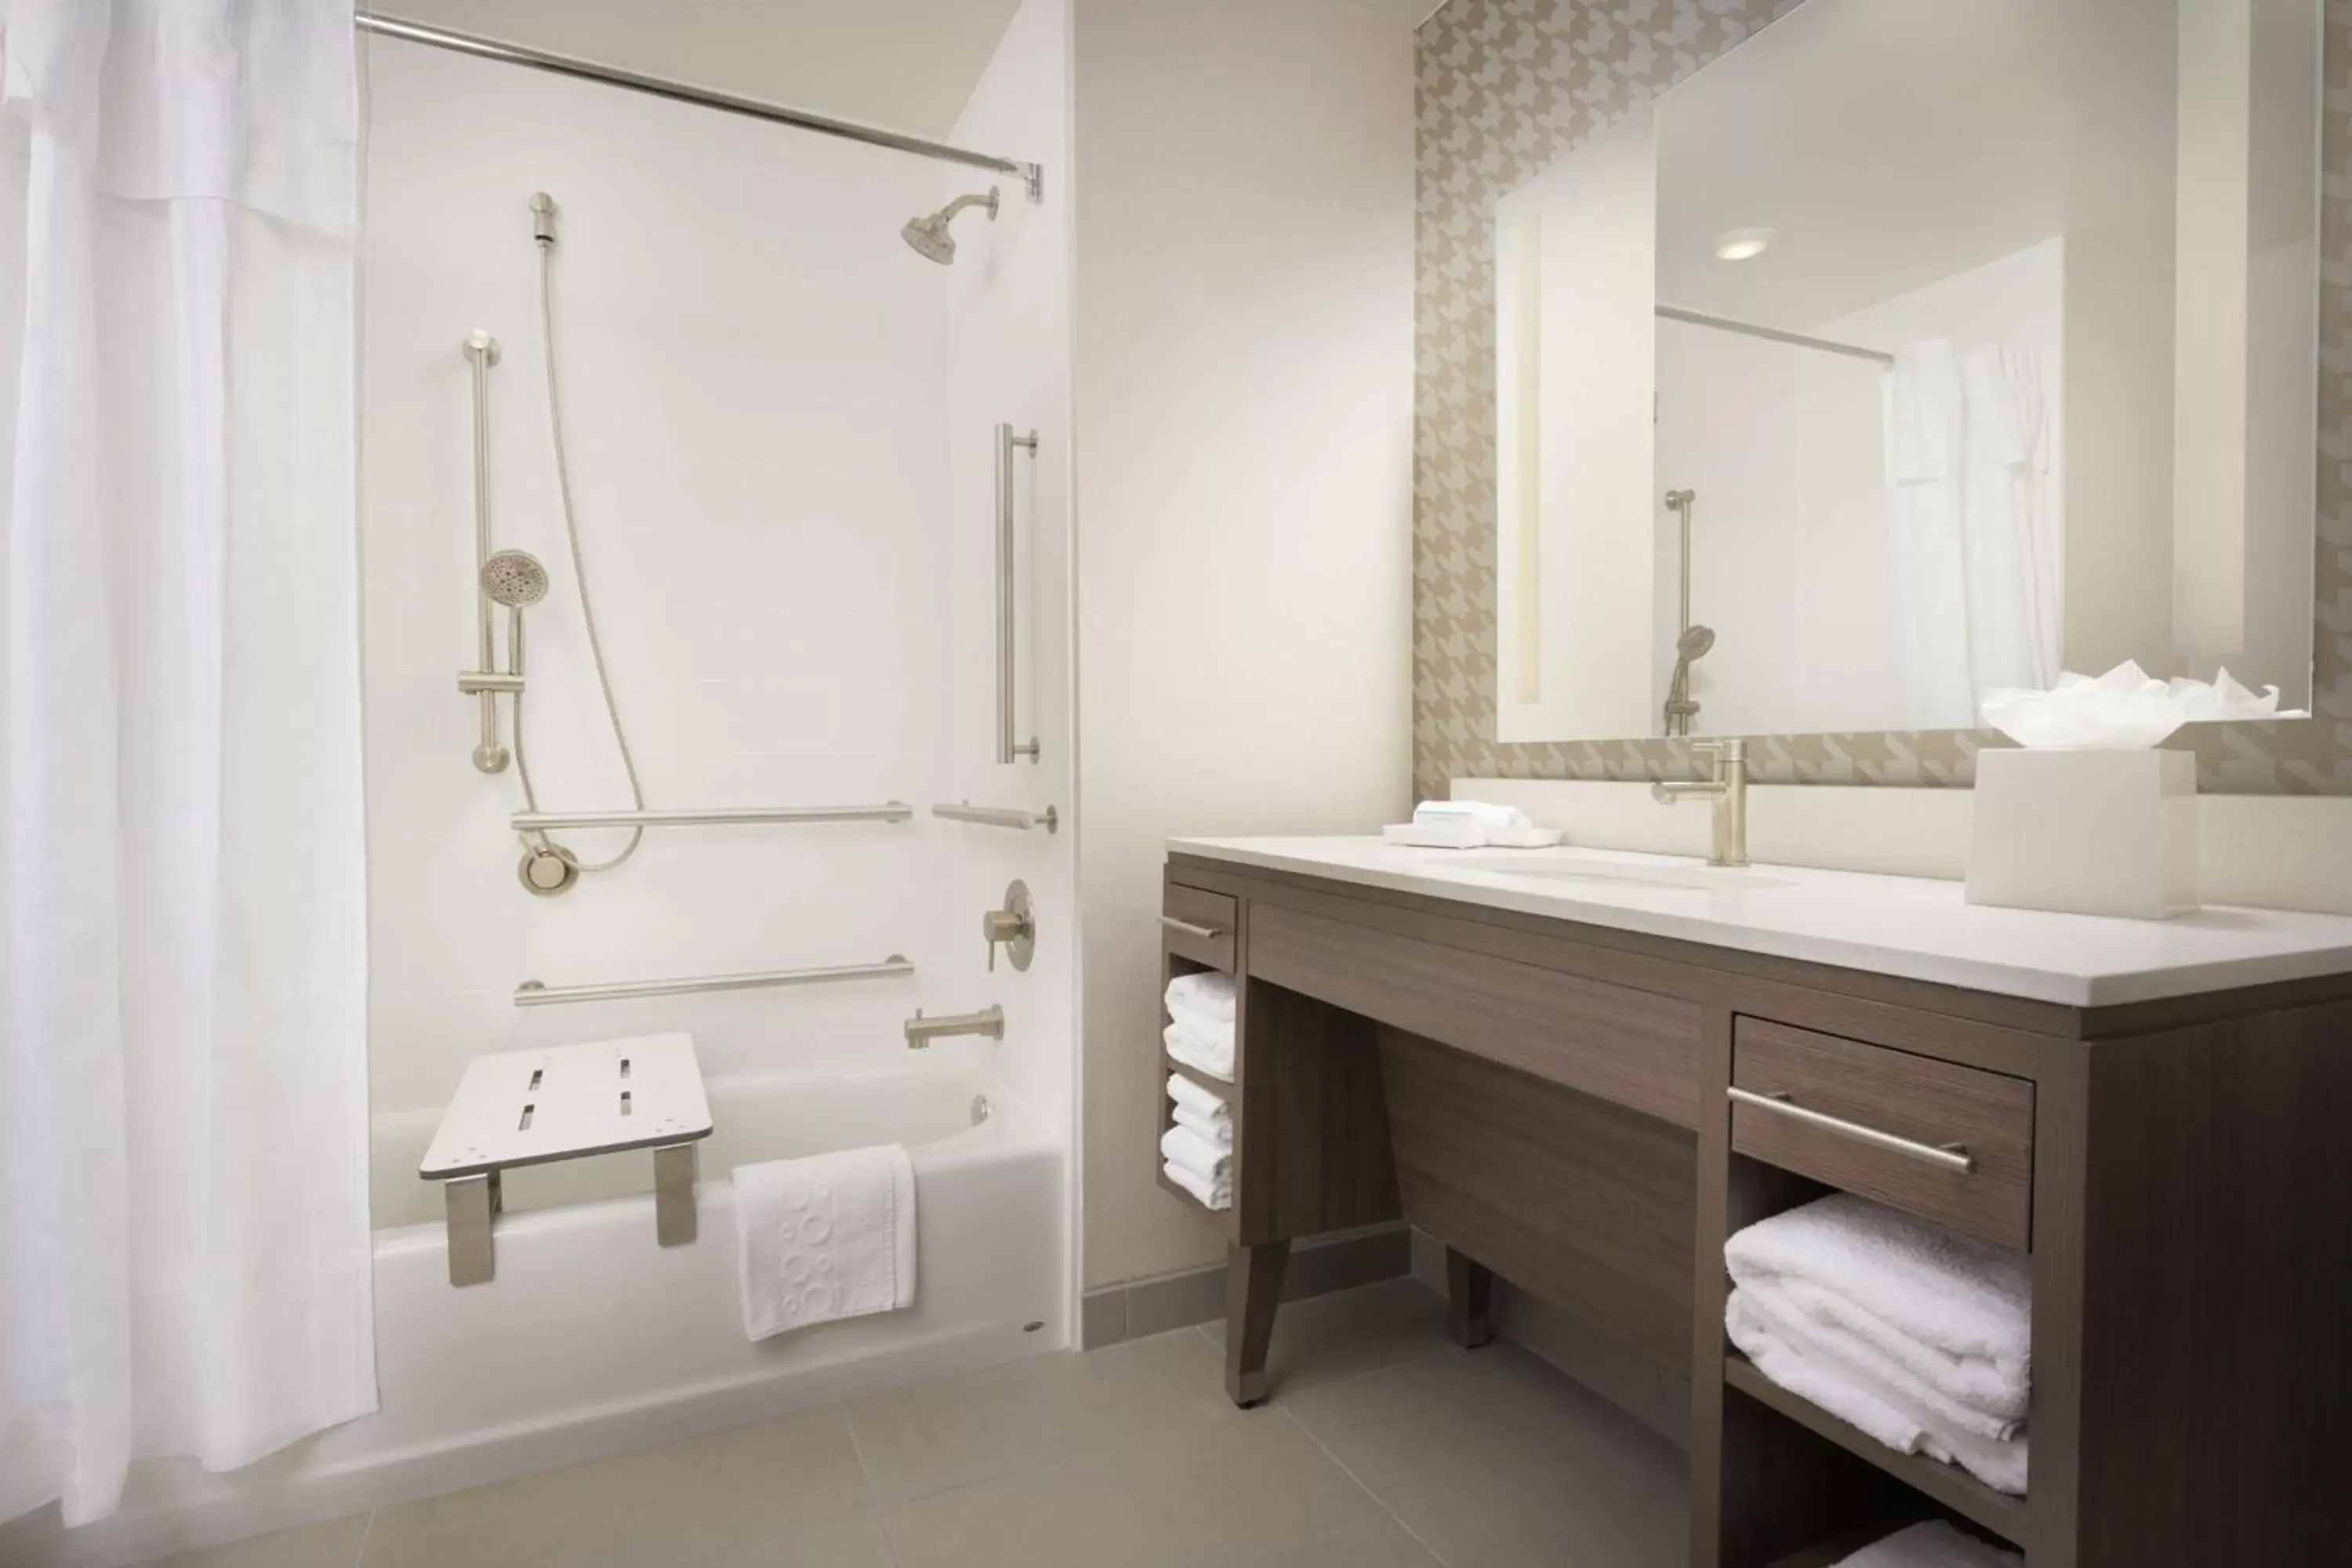 Bathroom in Home2 Suites By Hilton Atlanta Nw/Kennesaw, Ga